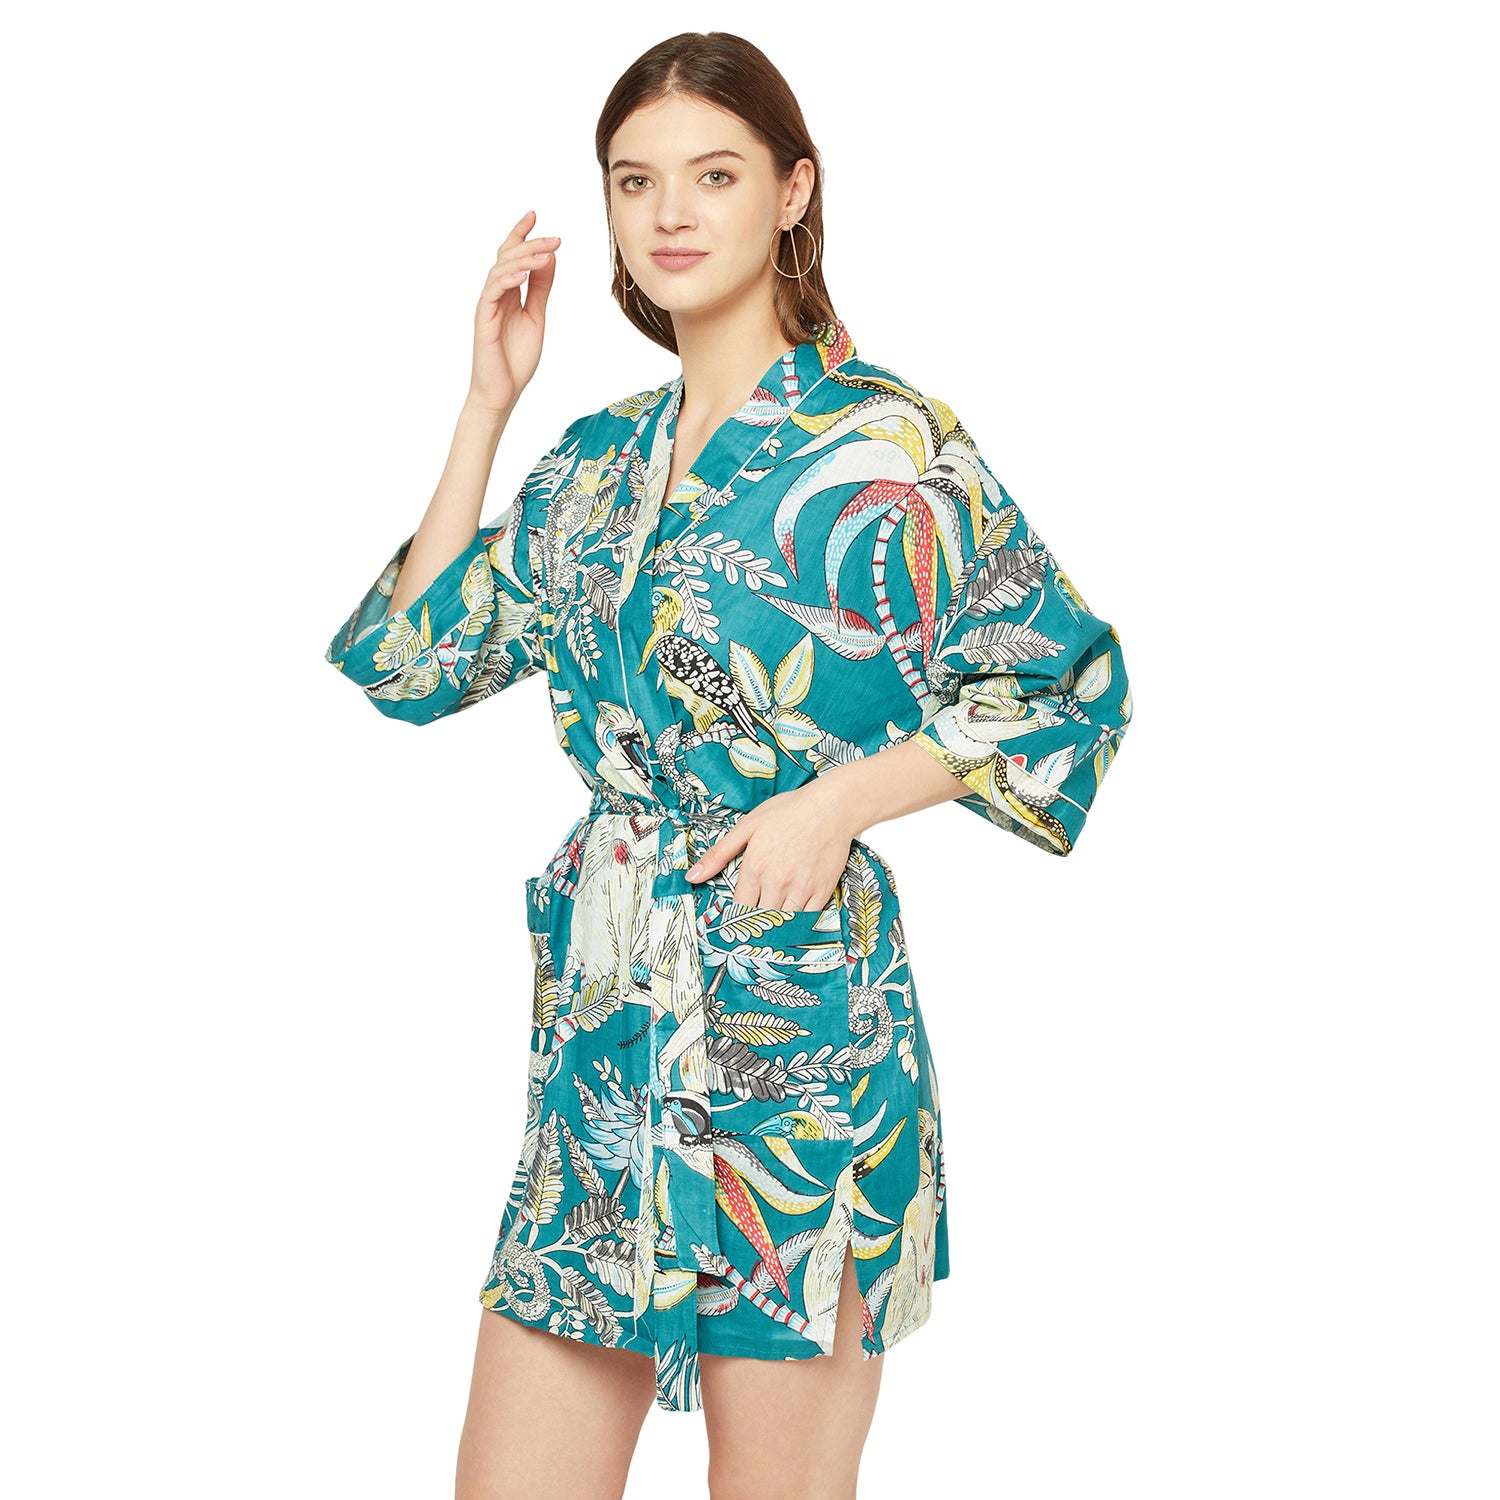 'Summer's Embrace' 100% Cotton Kimono Robe